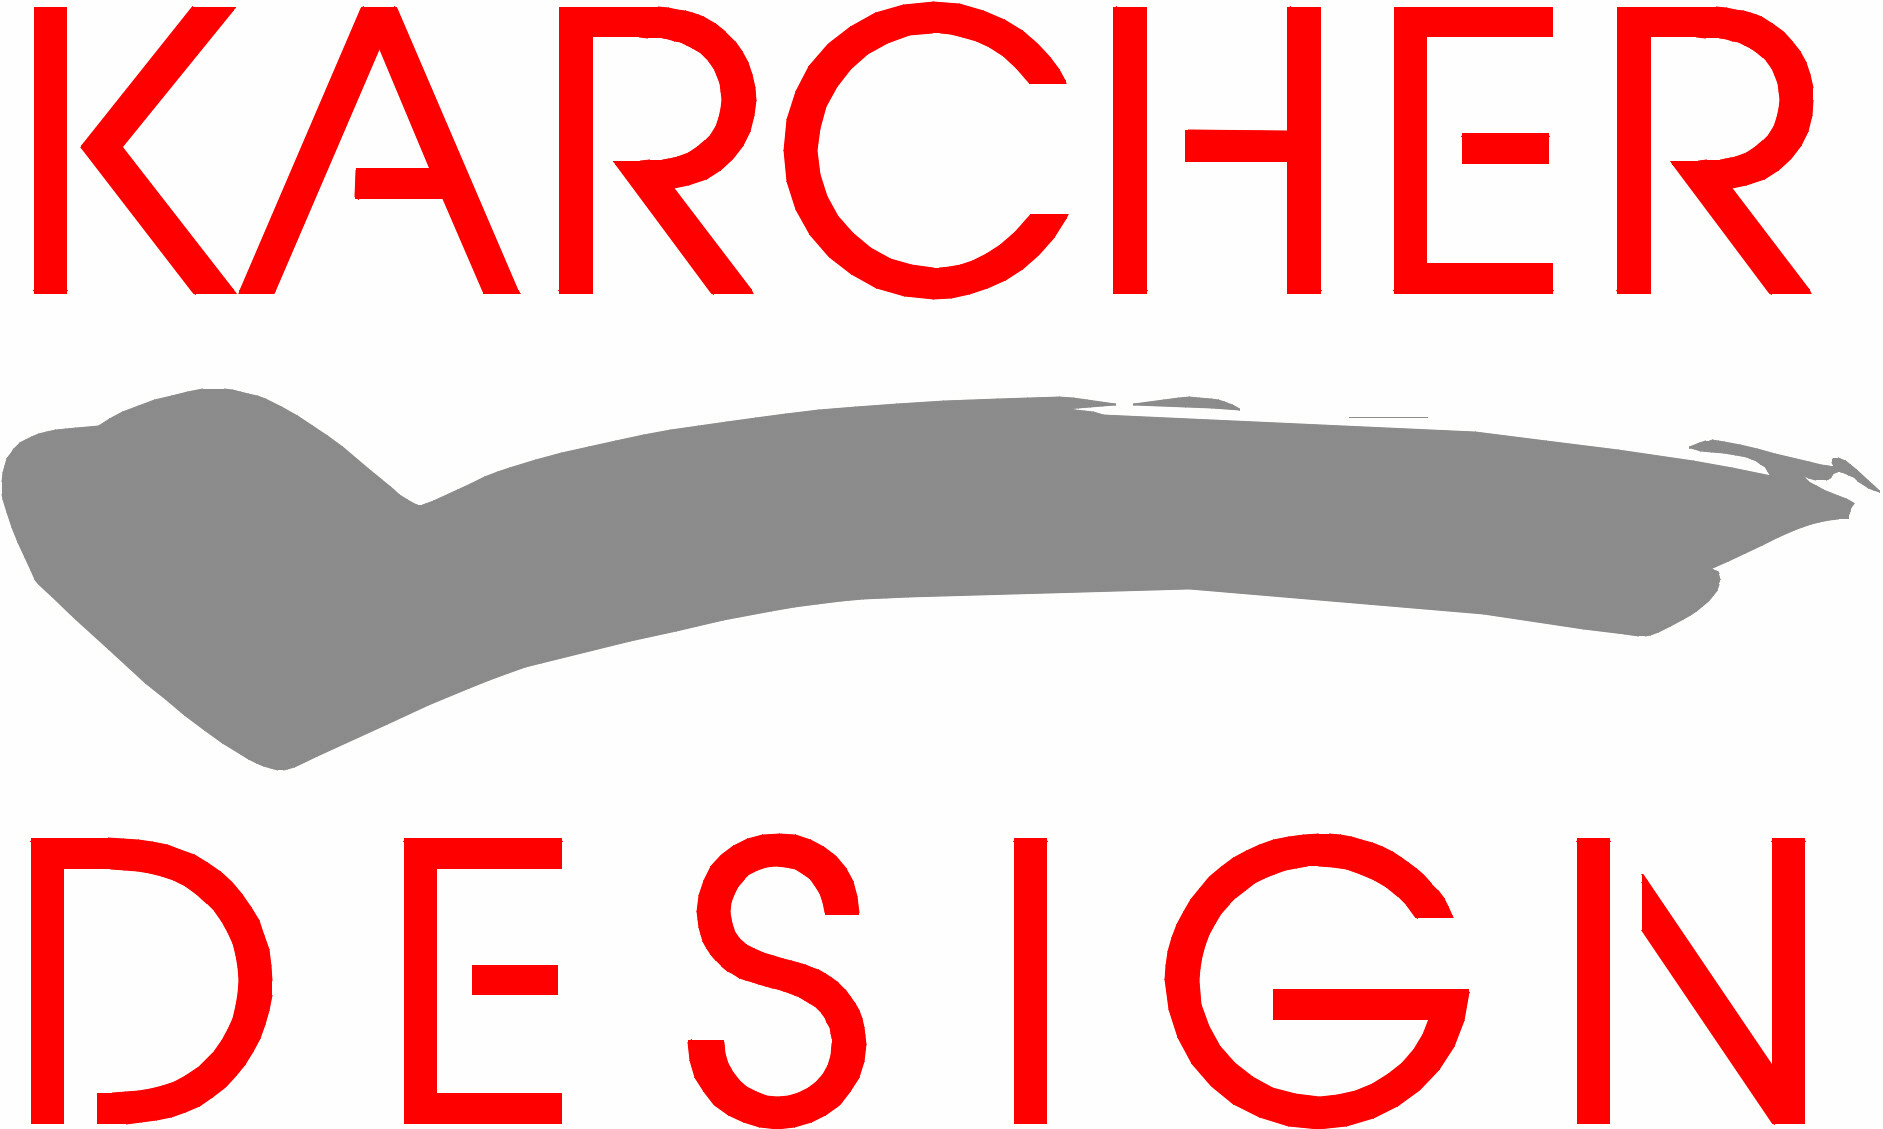 Karcher_Logo.jpg